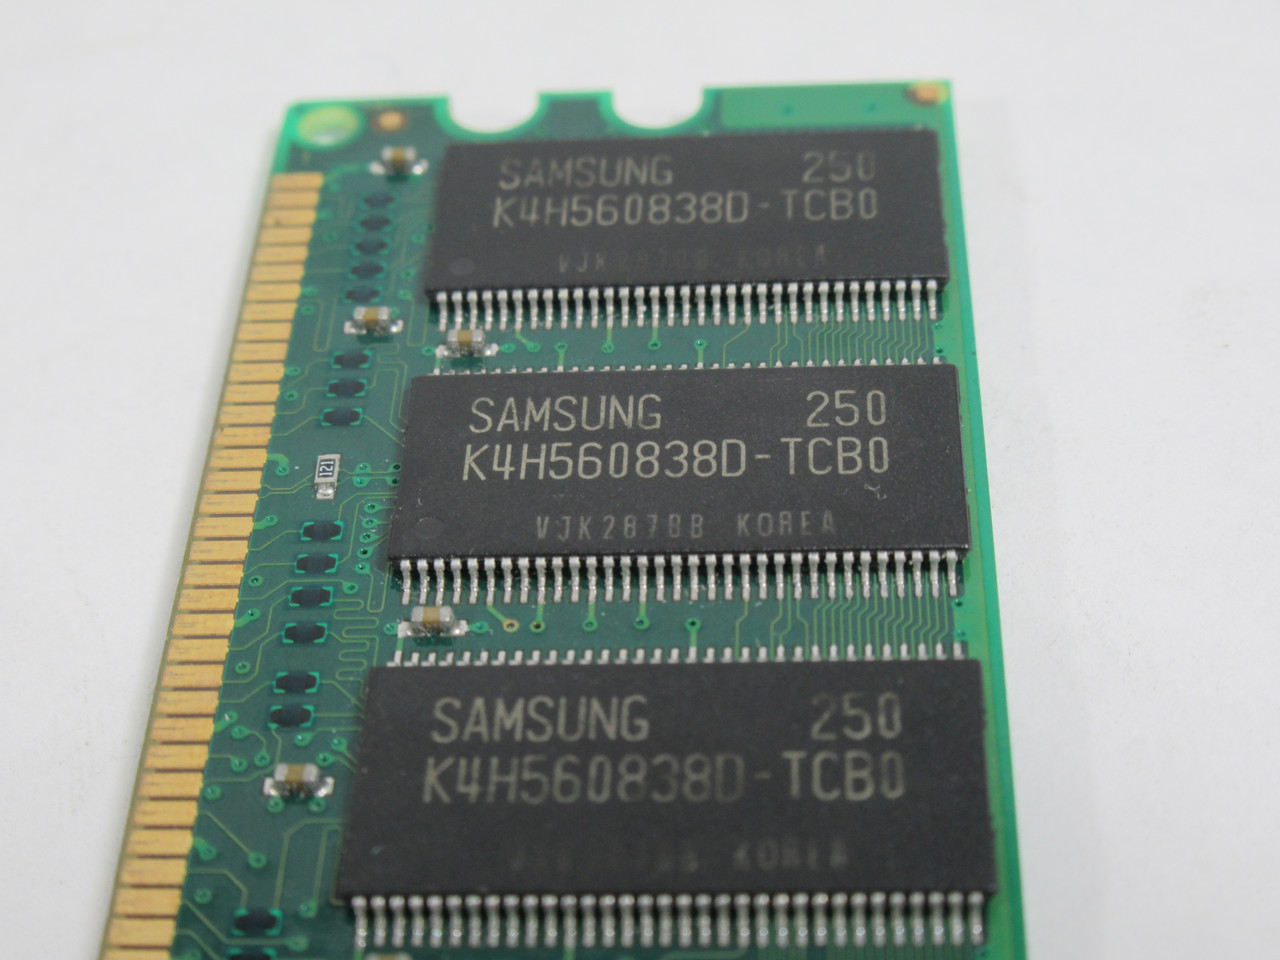 Samsung K4H560838D-TCB0 SDRam Memory Module 512MB 266MHz USED